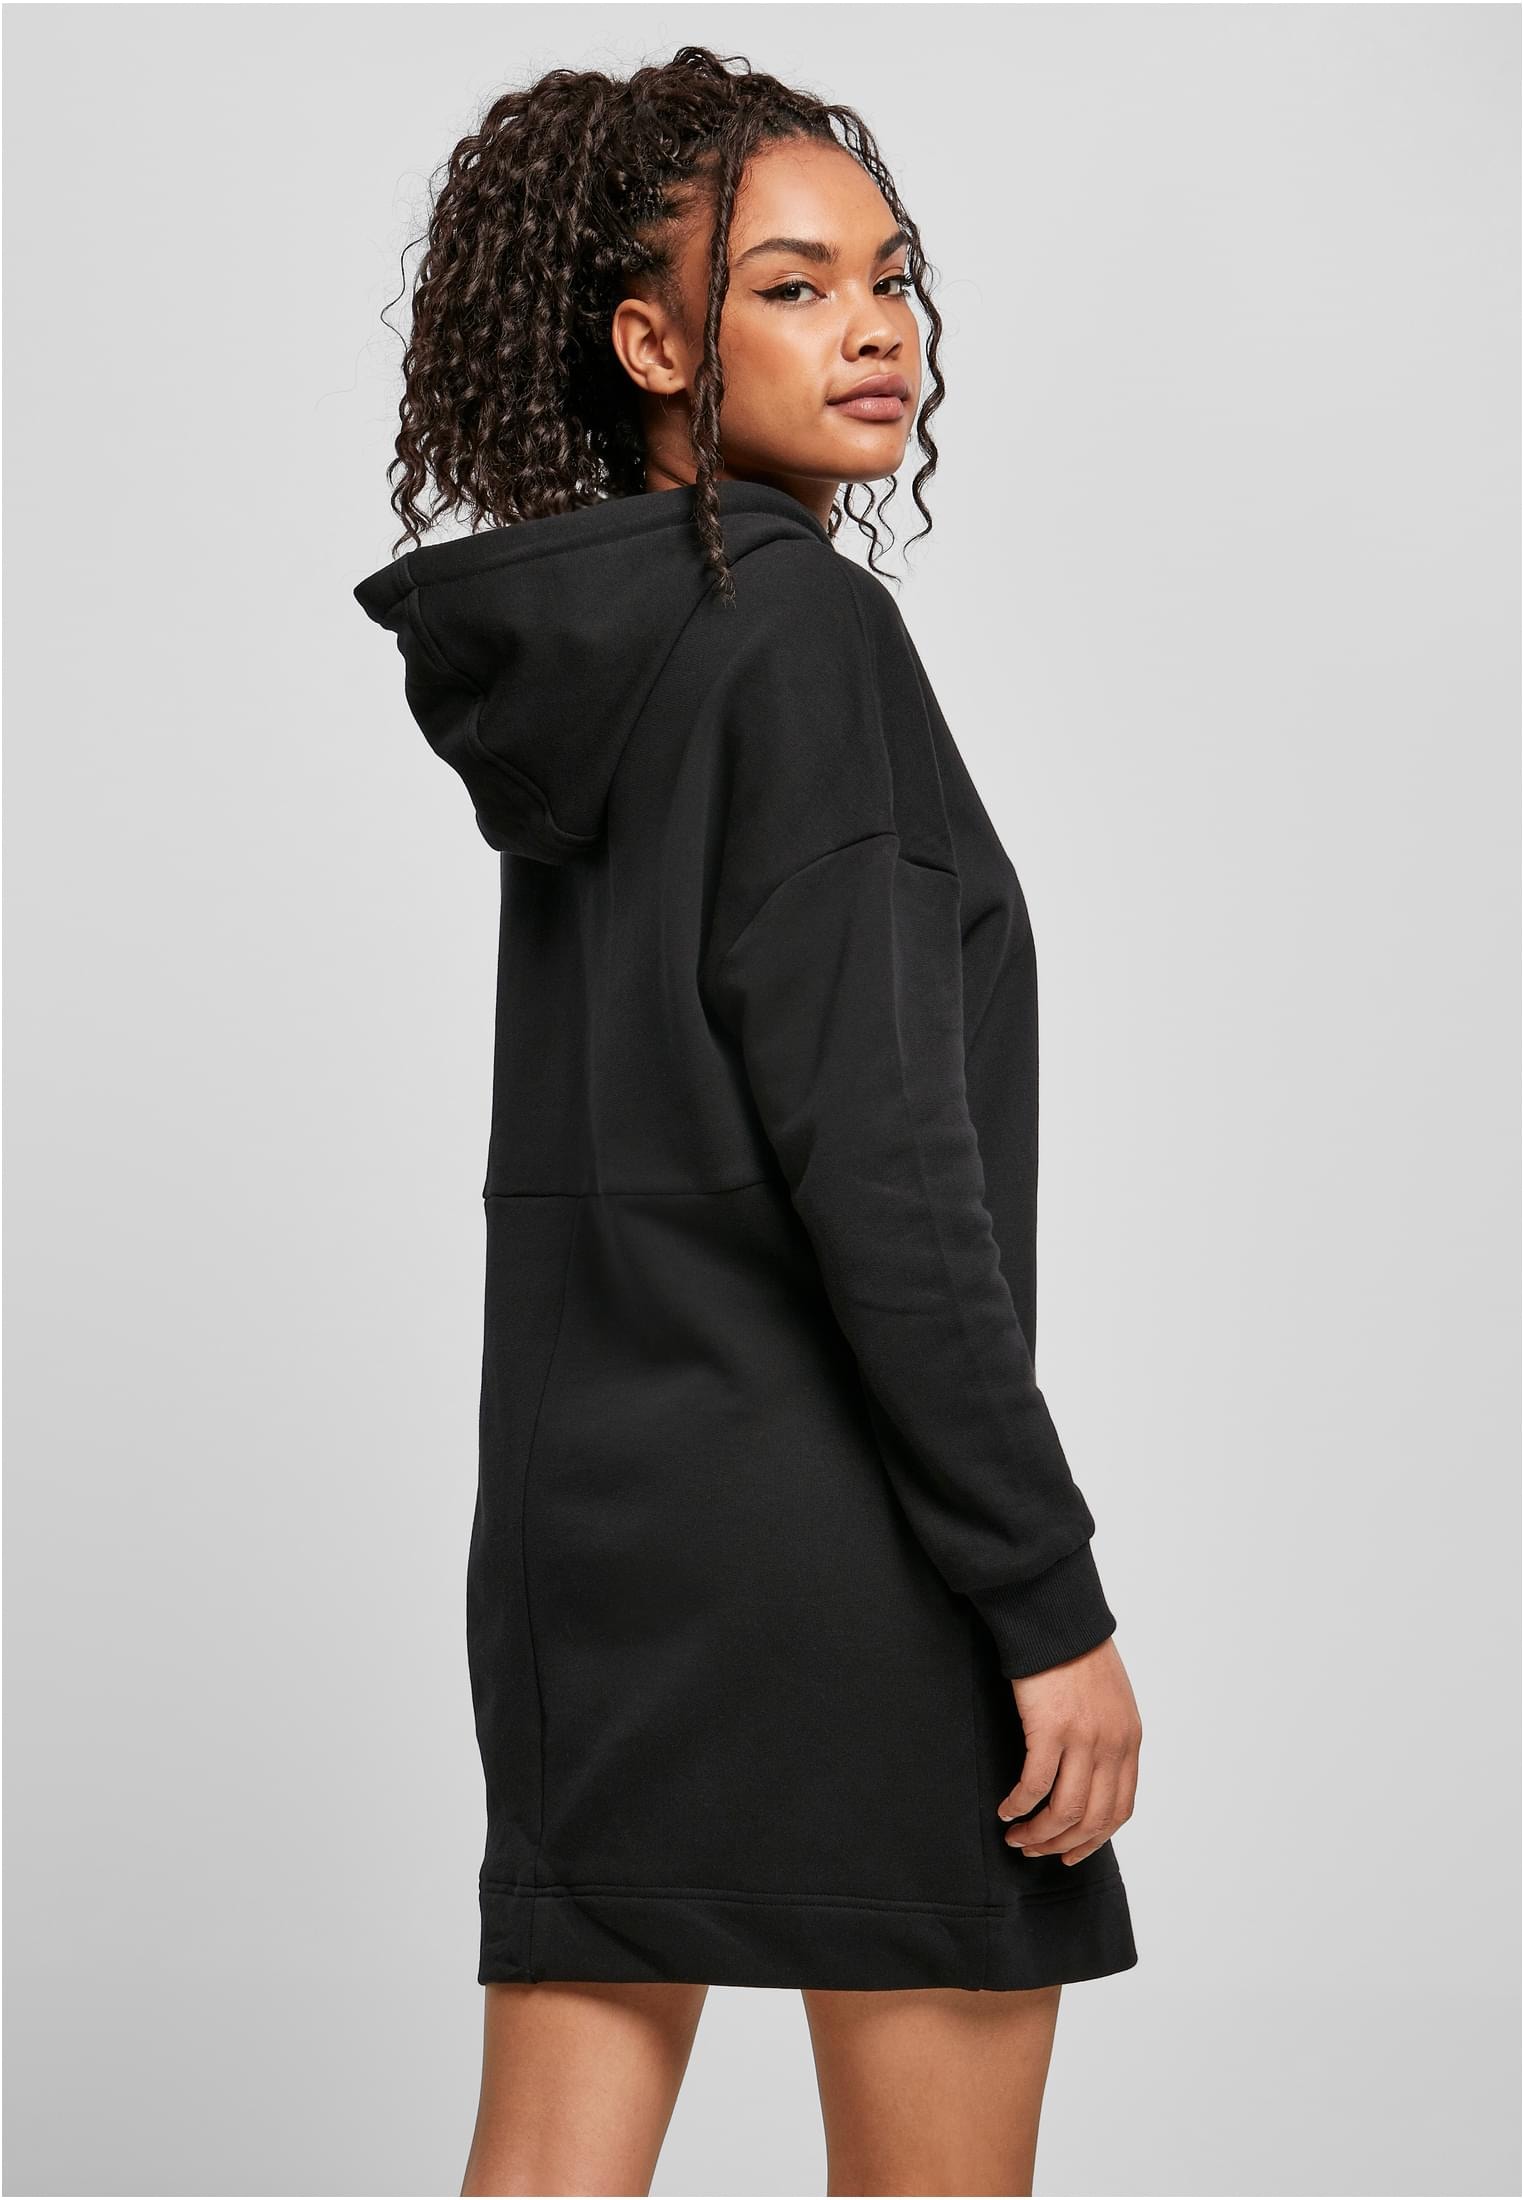 (1 | tlg.) online bestellen Jerseykleid CLASSICS Dress«, Terry Ladies Hoody BAUR URBAN Oversized Organic »Damen